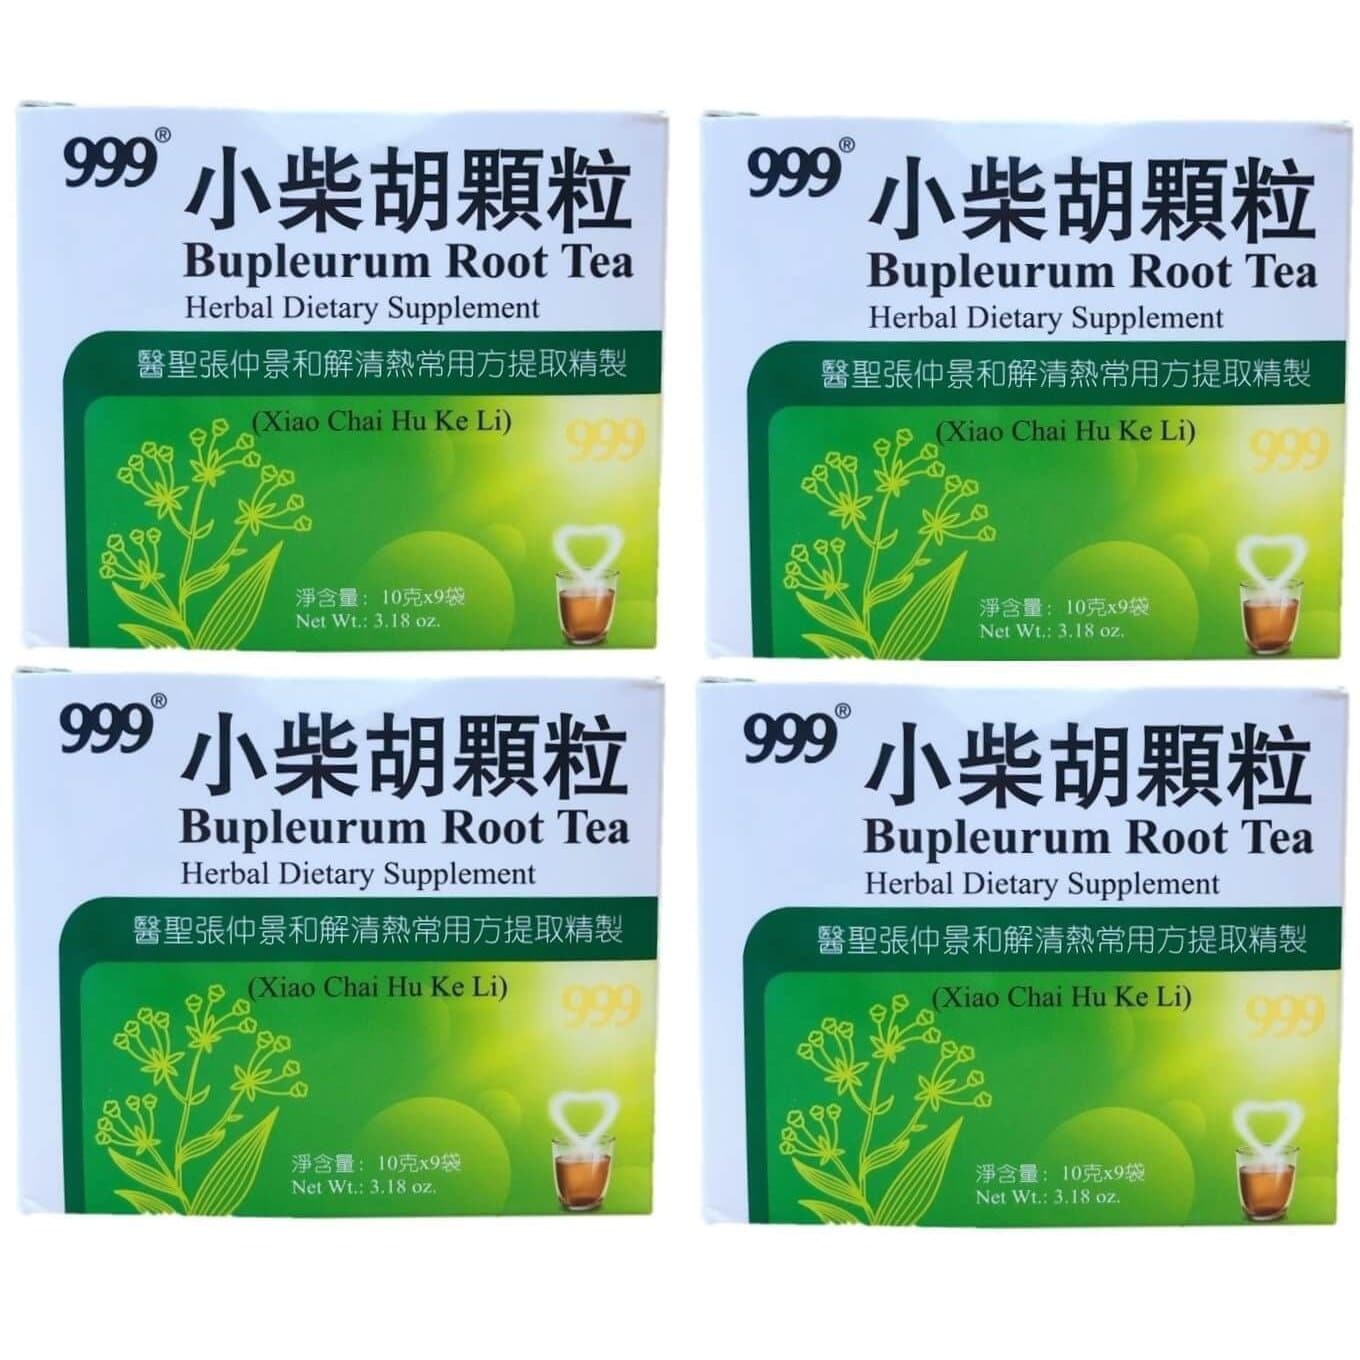 4 Boxes 999 Bupleurum Root Tea 10g (9 Bags Per Box) - Buy at New Green Nutrition